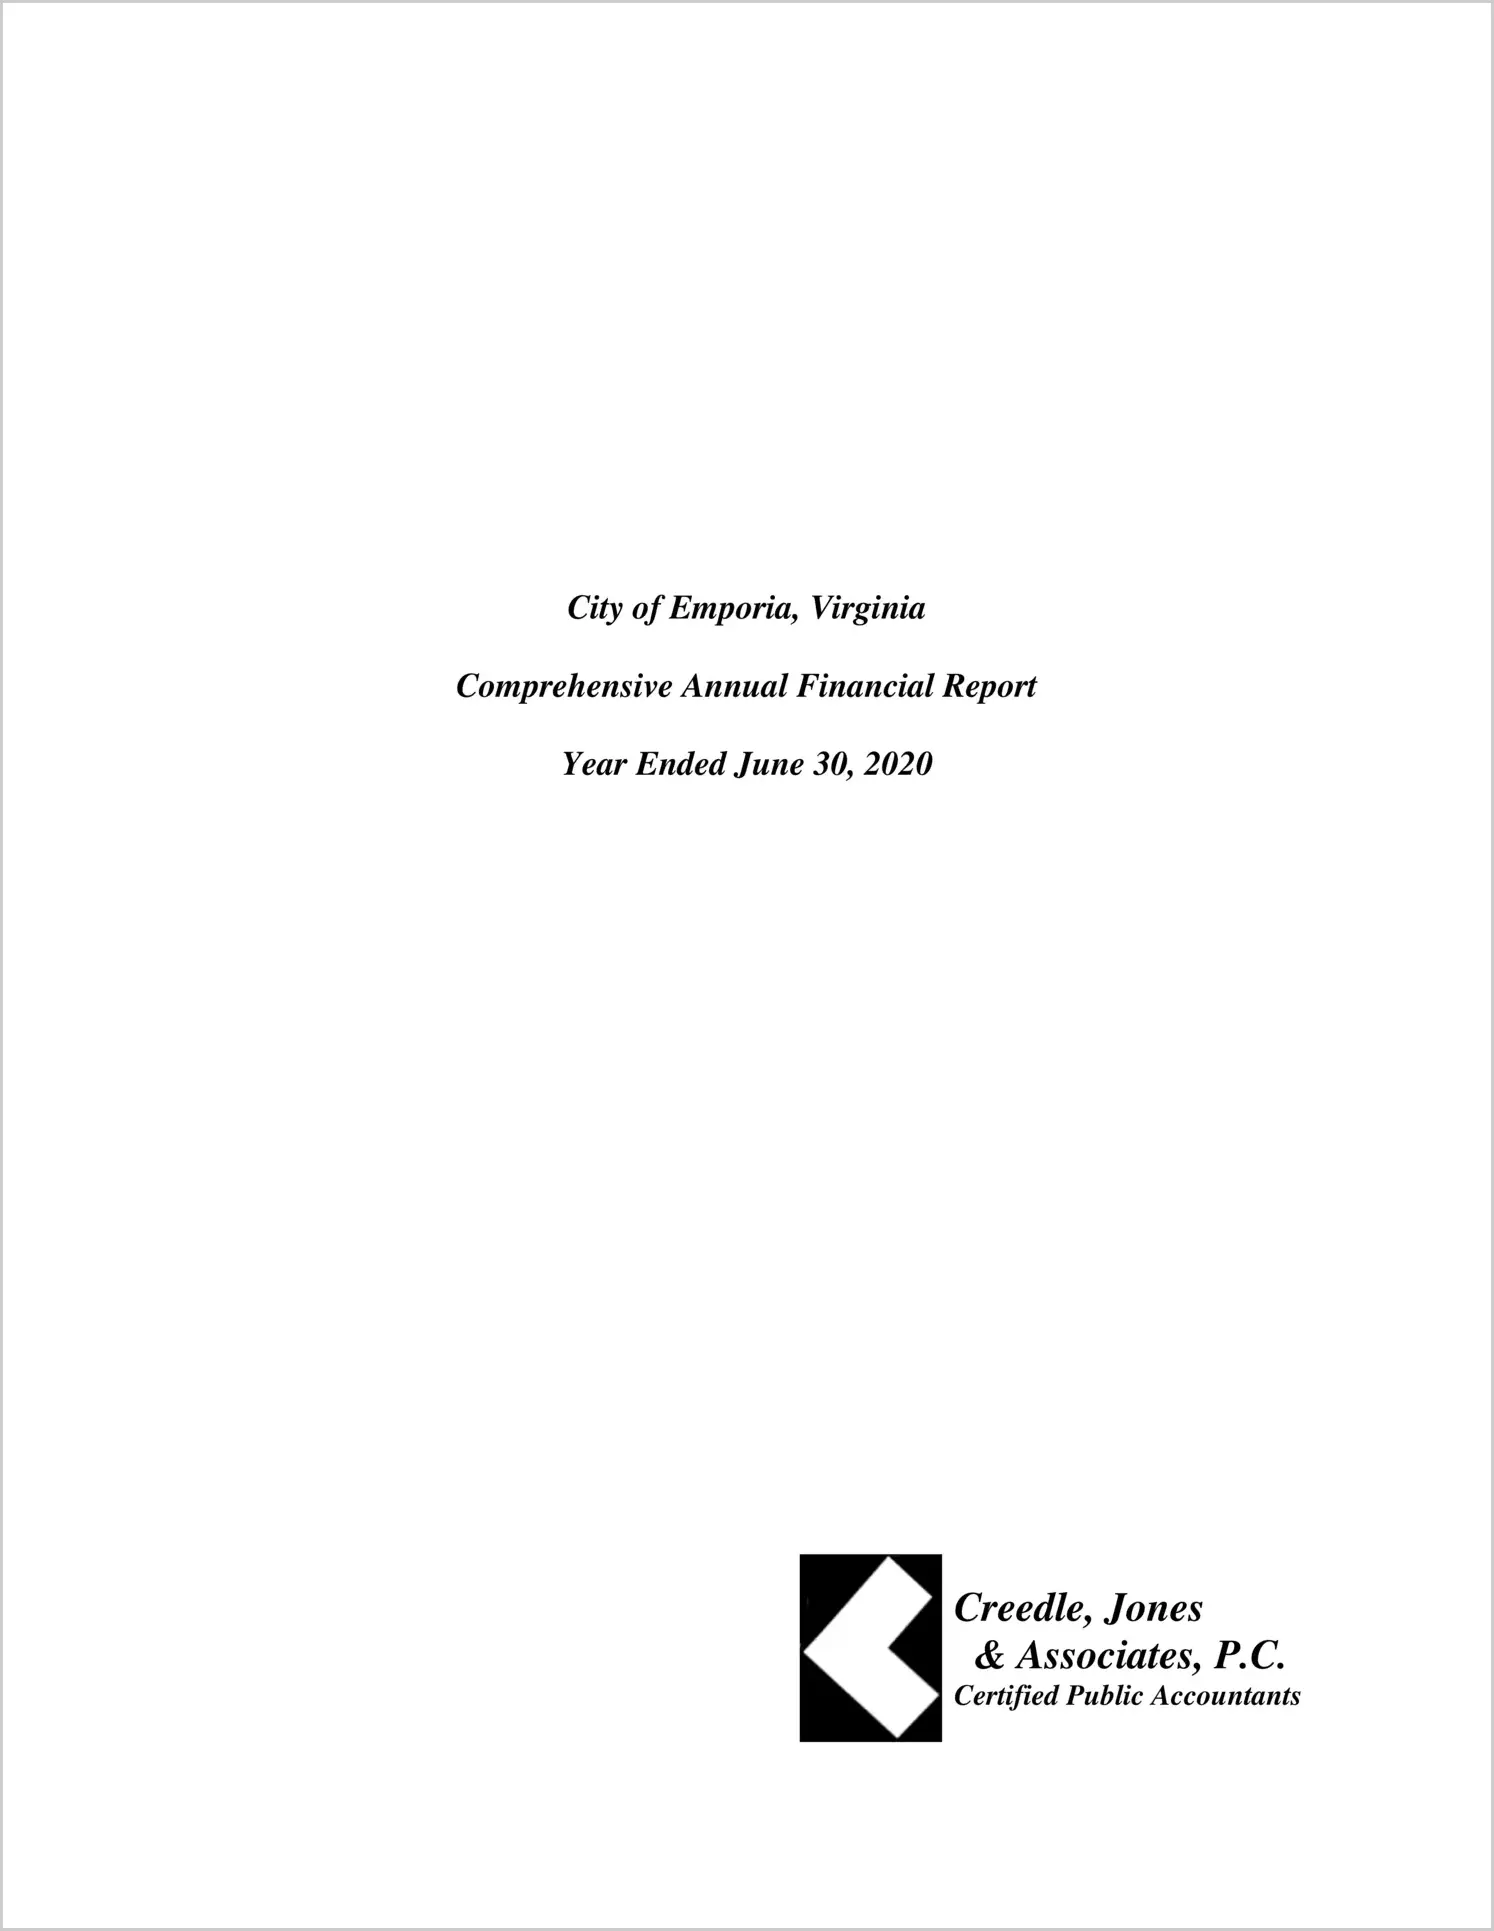 2020 Annual Financial Report for City of Emporia